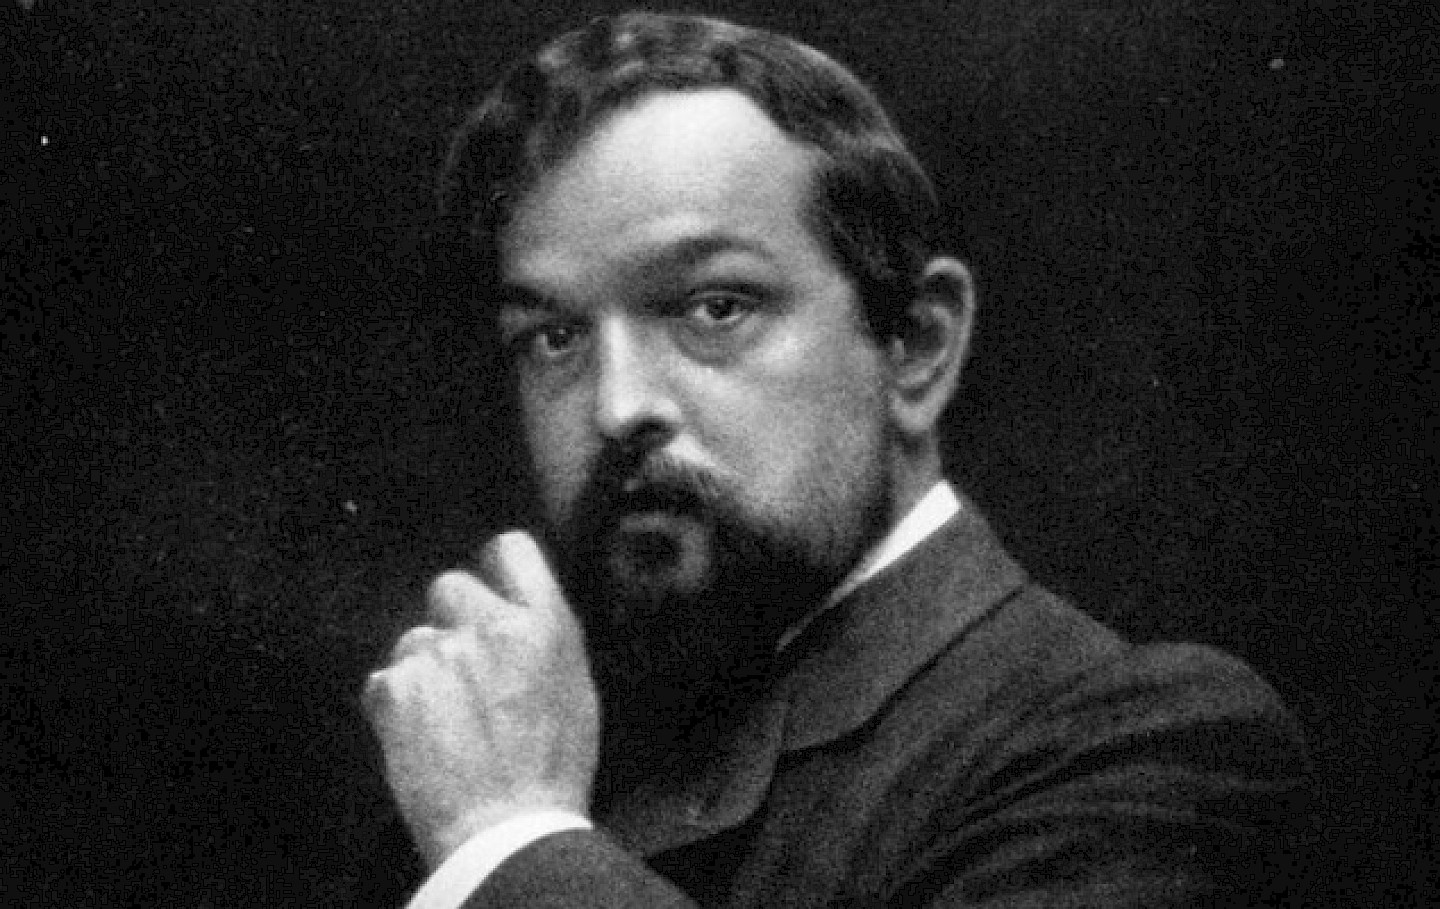 Bilder der Antike in Debussys Klaviermusik